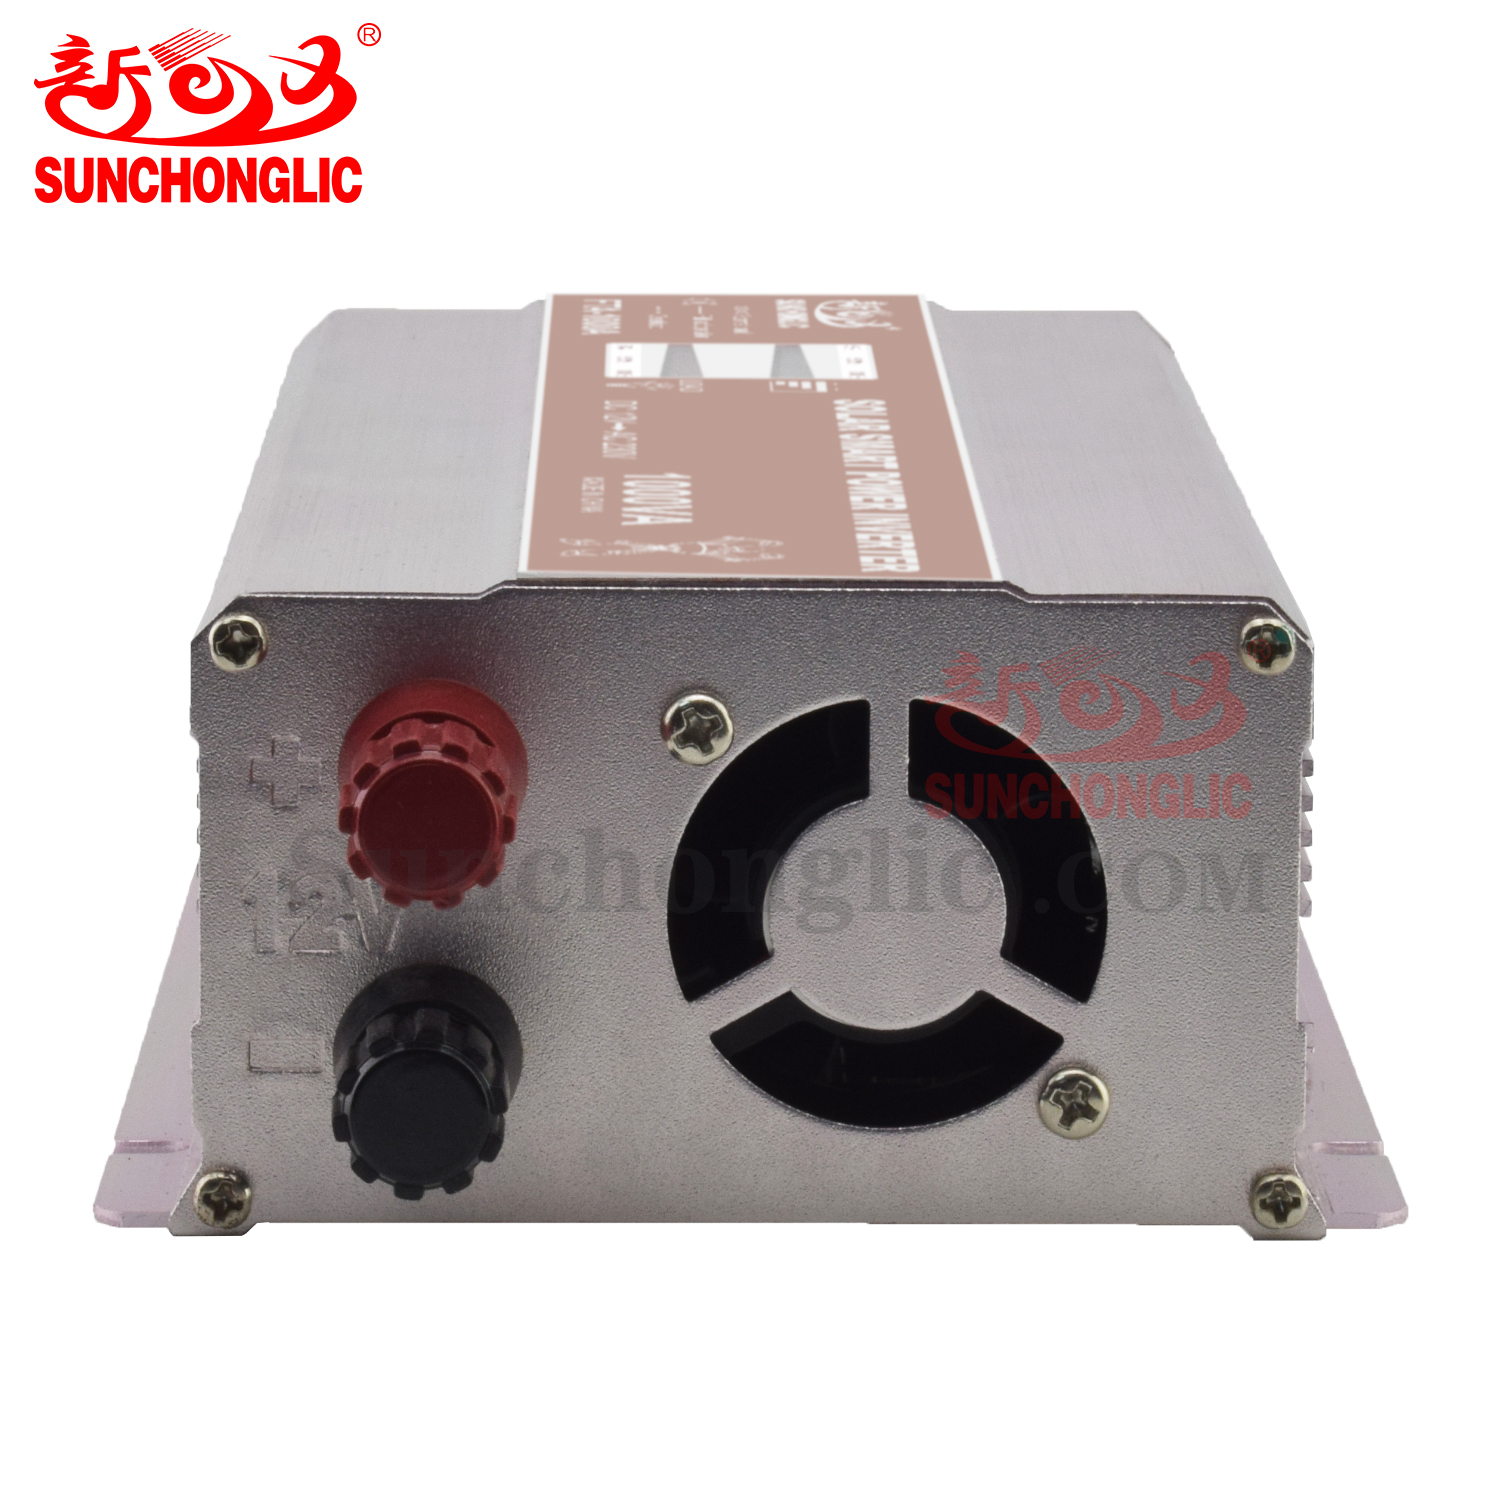 Modified Sine Wave Inverter - FTA-1000A